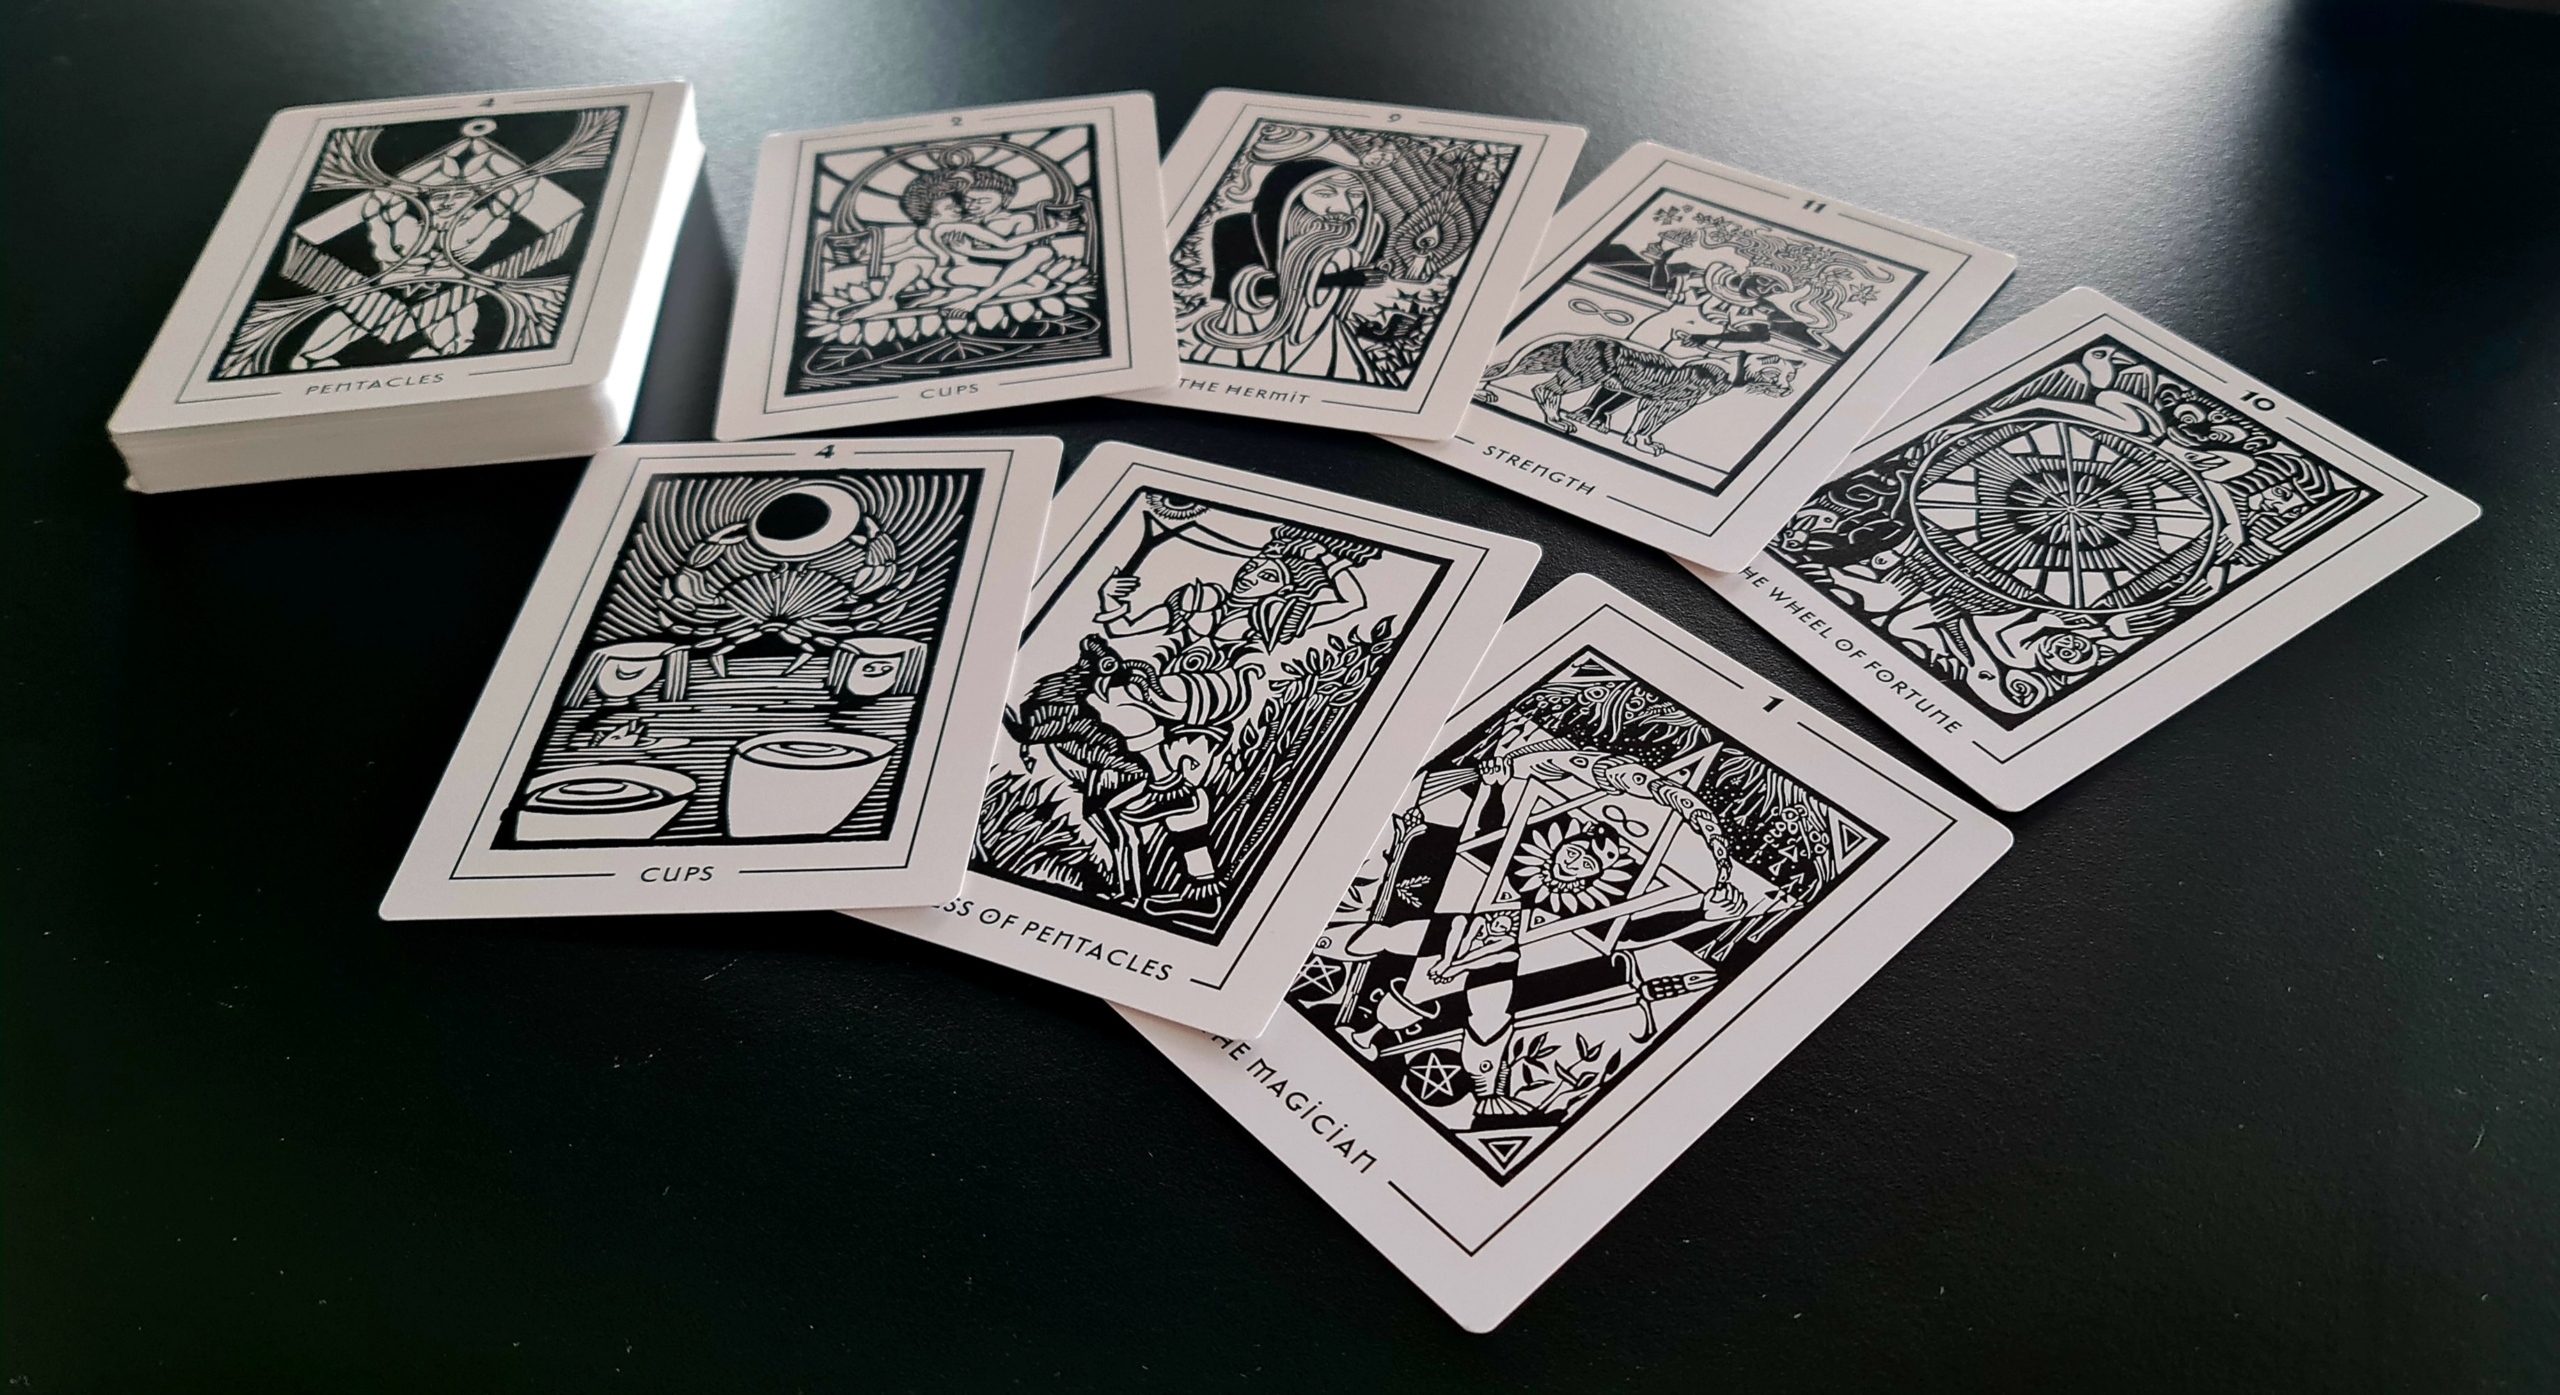 Tarotkarten aus The Light and Shadow Tarot